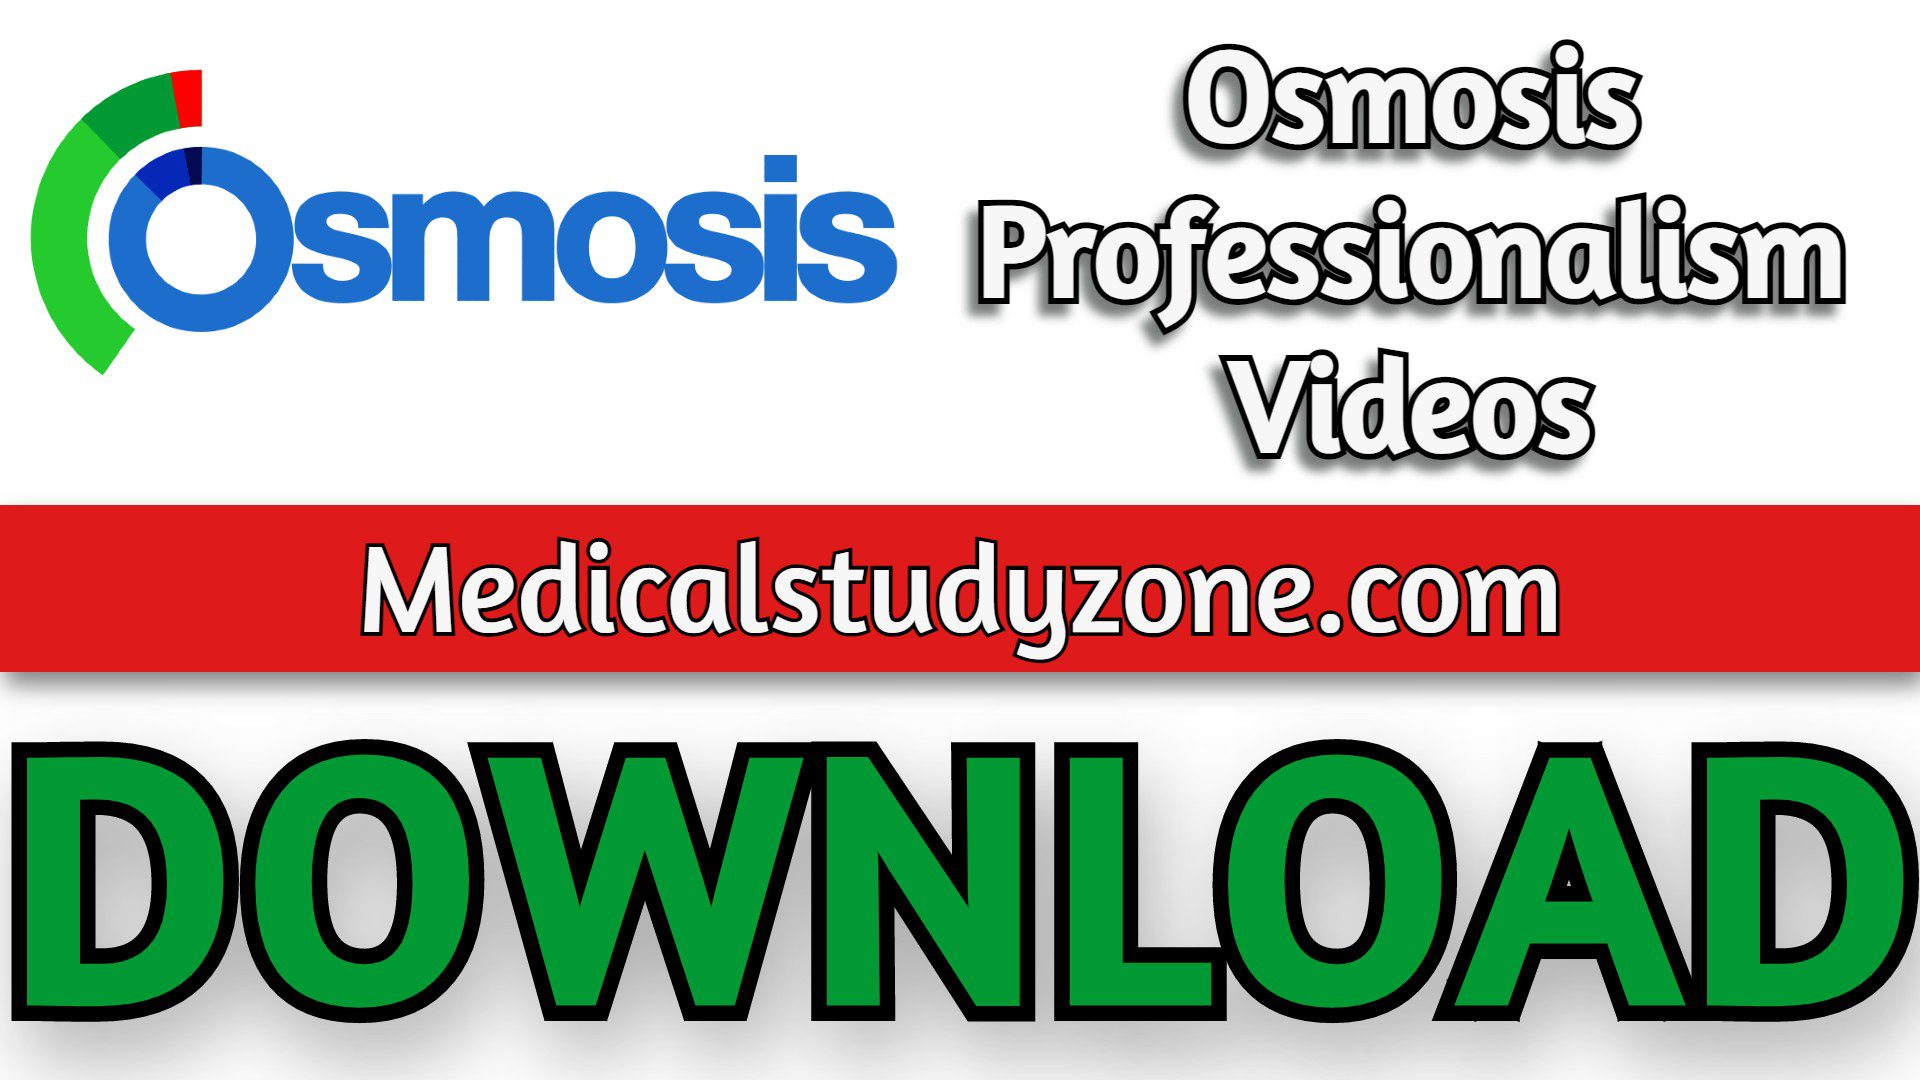 Osmosis Professionalism Videos 2022 Free Download